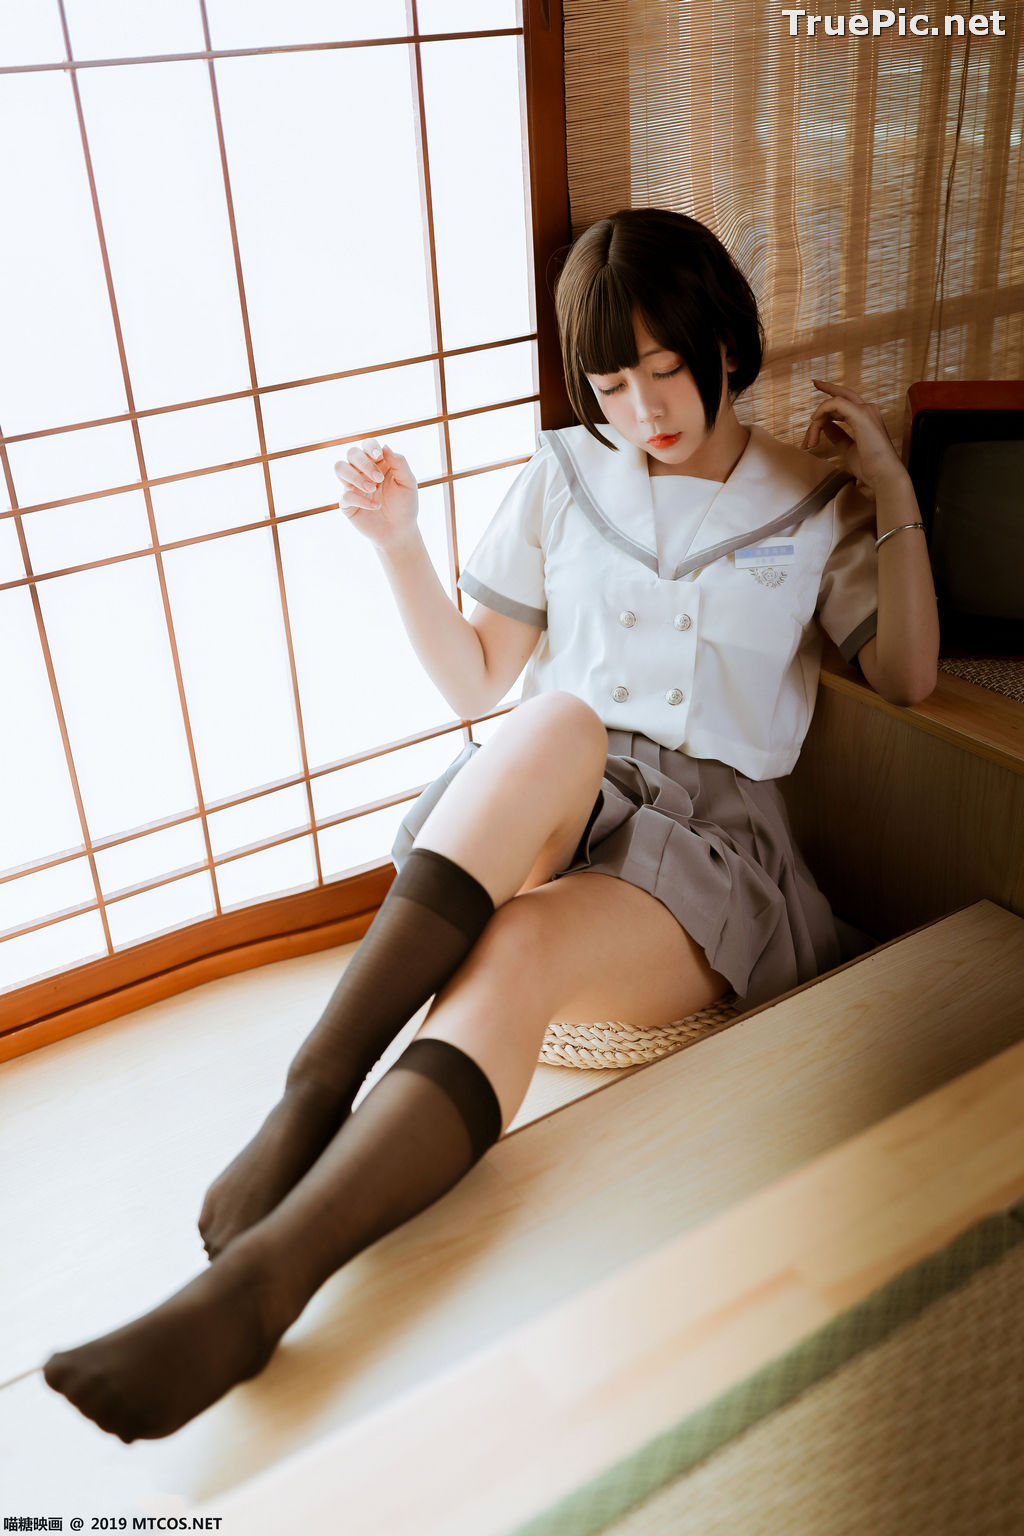 Image [MTCos] 喵糖映画 Vol.039 – Chinese Cute Model – Japanese School Uniform - TruePic.net - Picture-27